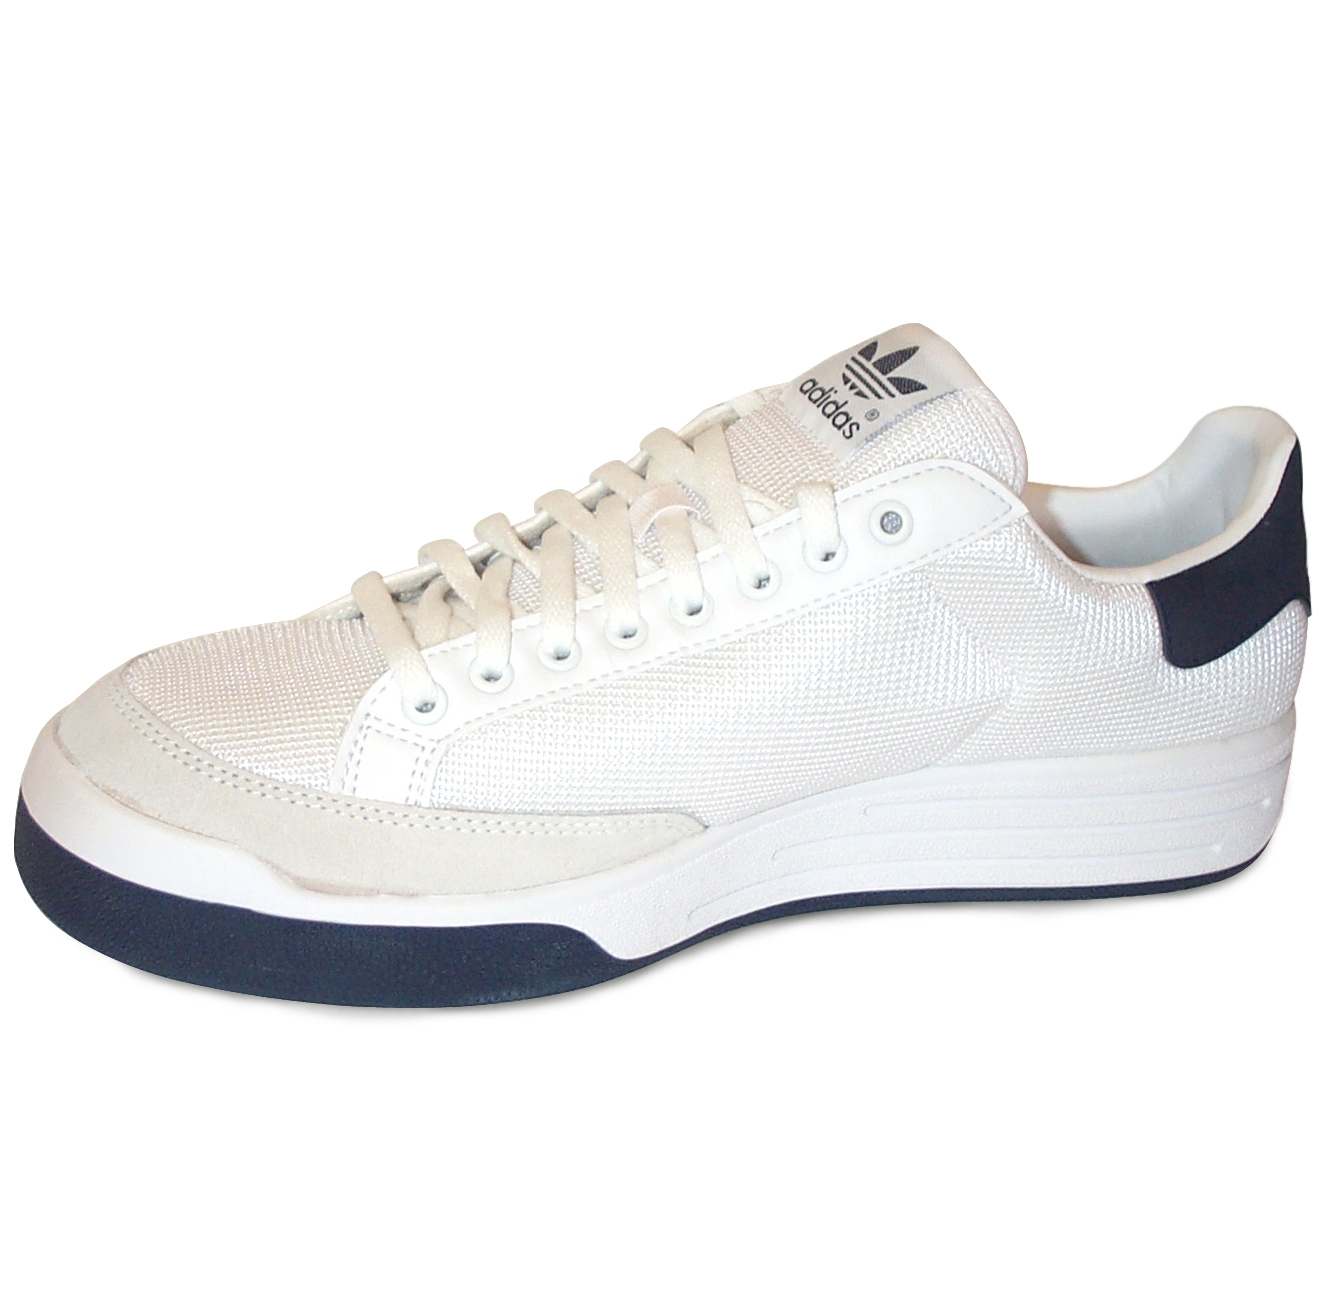 vene fryser Vi ses i morgen Adidas Rod Laver Super Tennis Shoe White/Navy | World Footbag